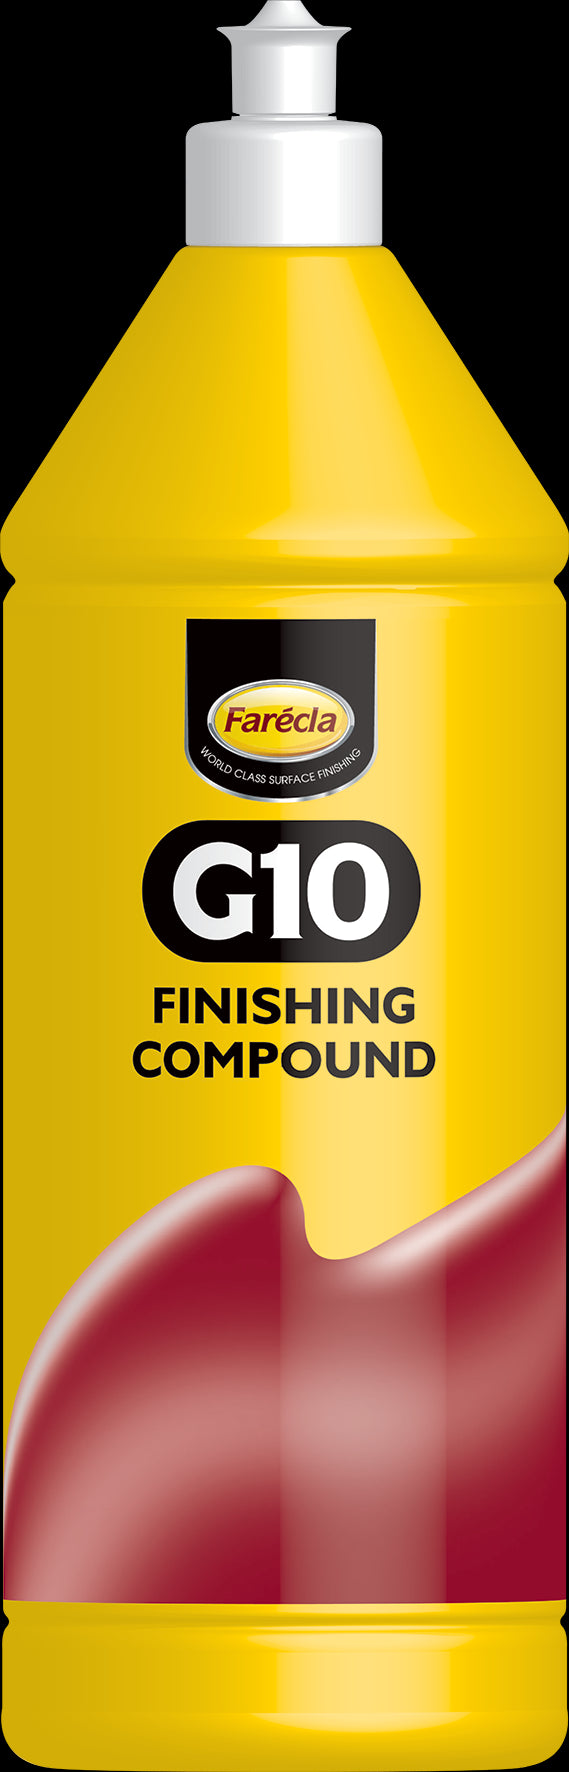 G101000 G10 Finishing Compound - 1 litre